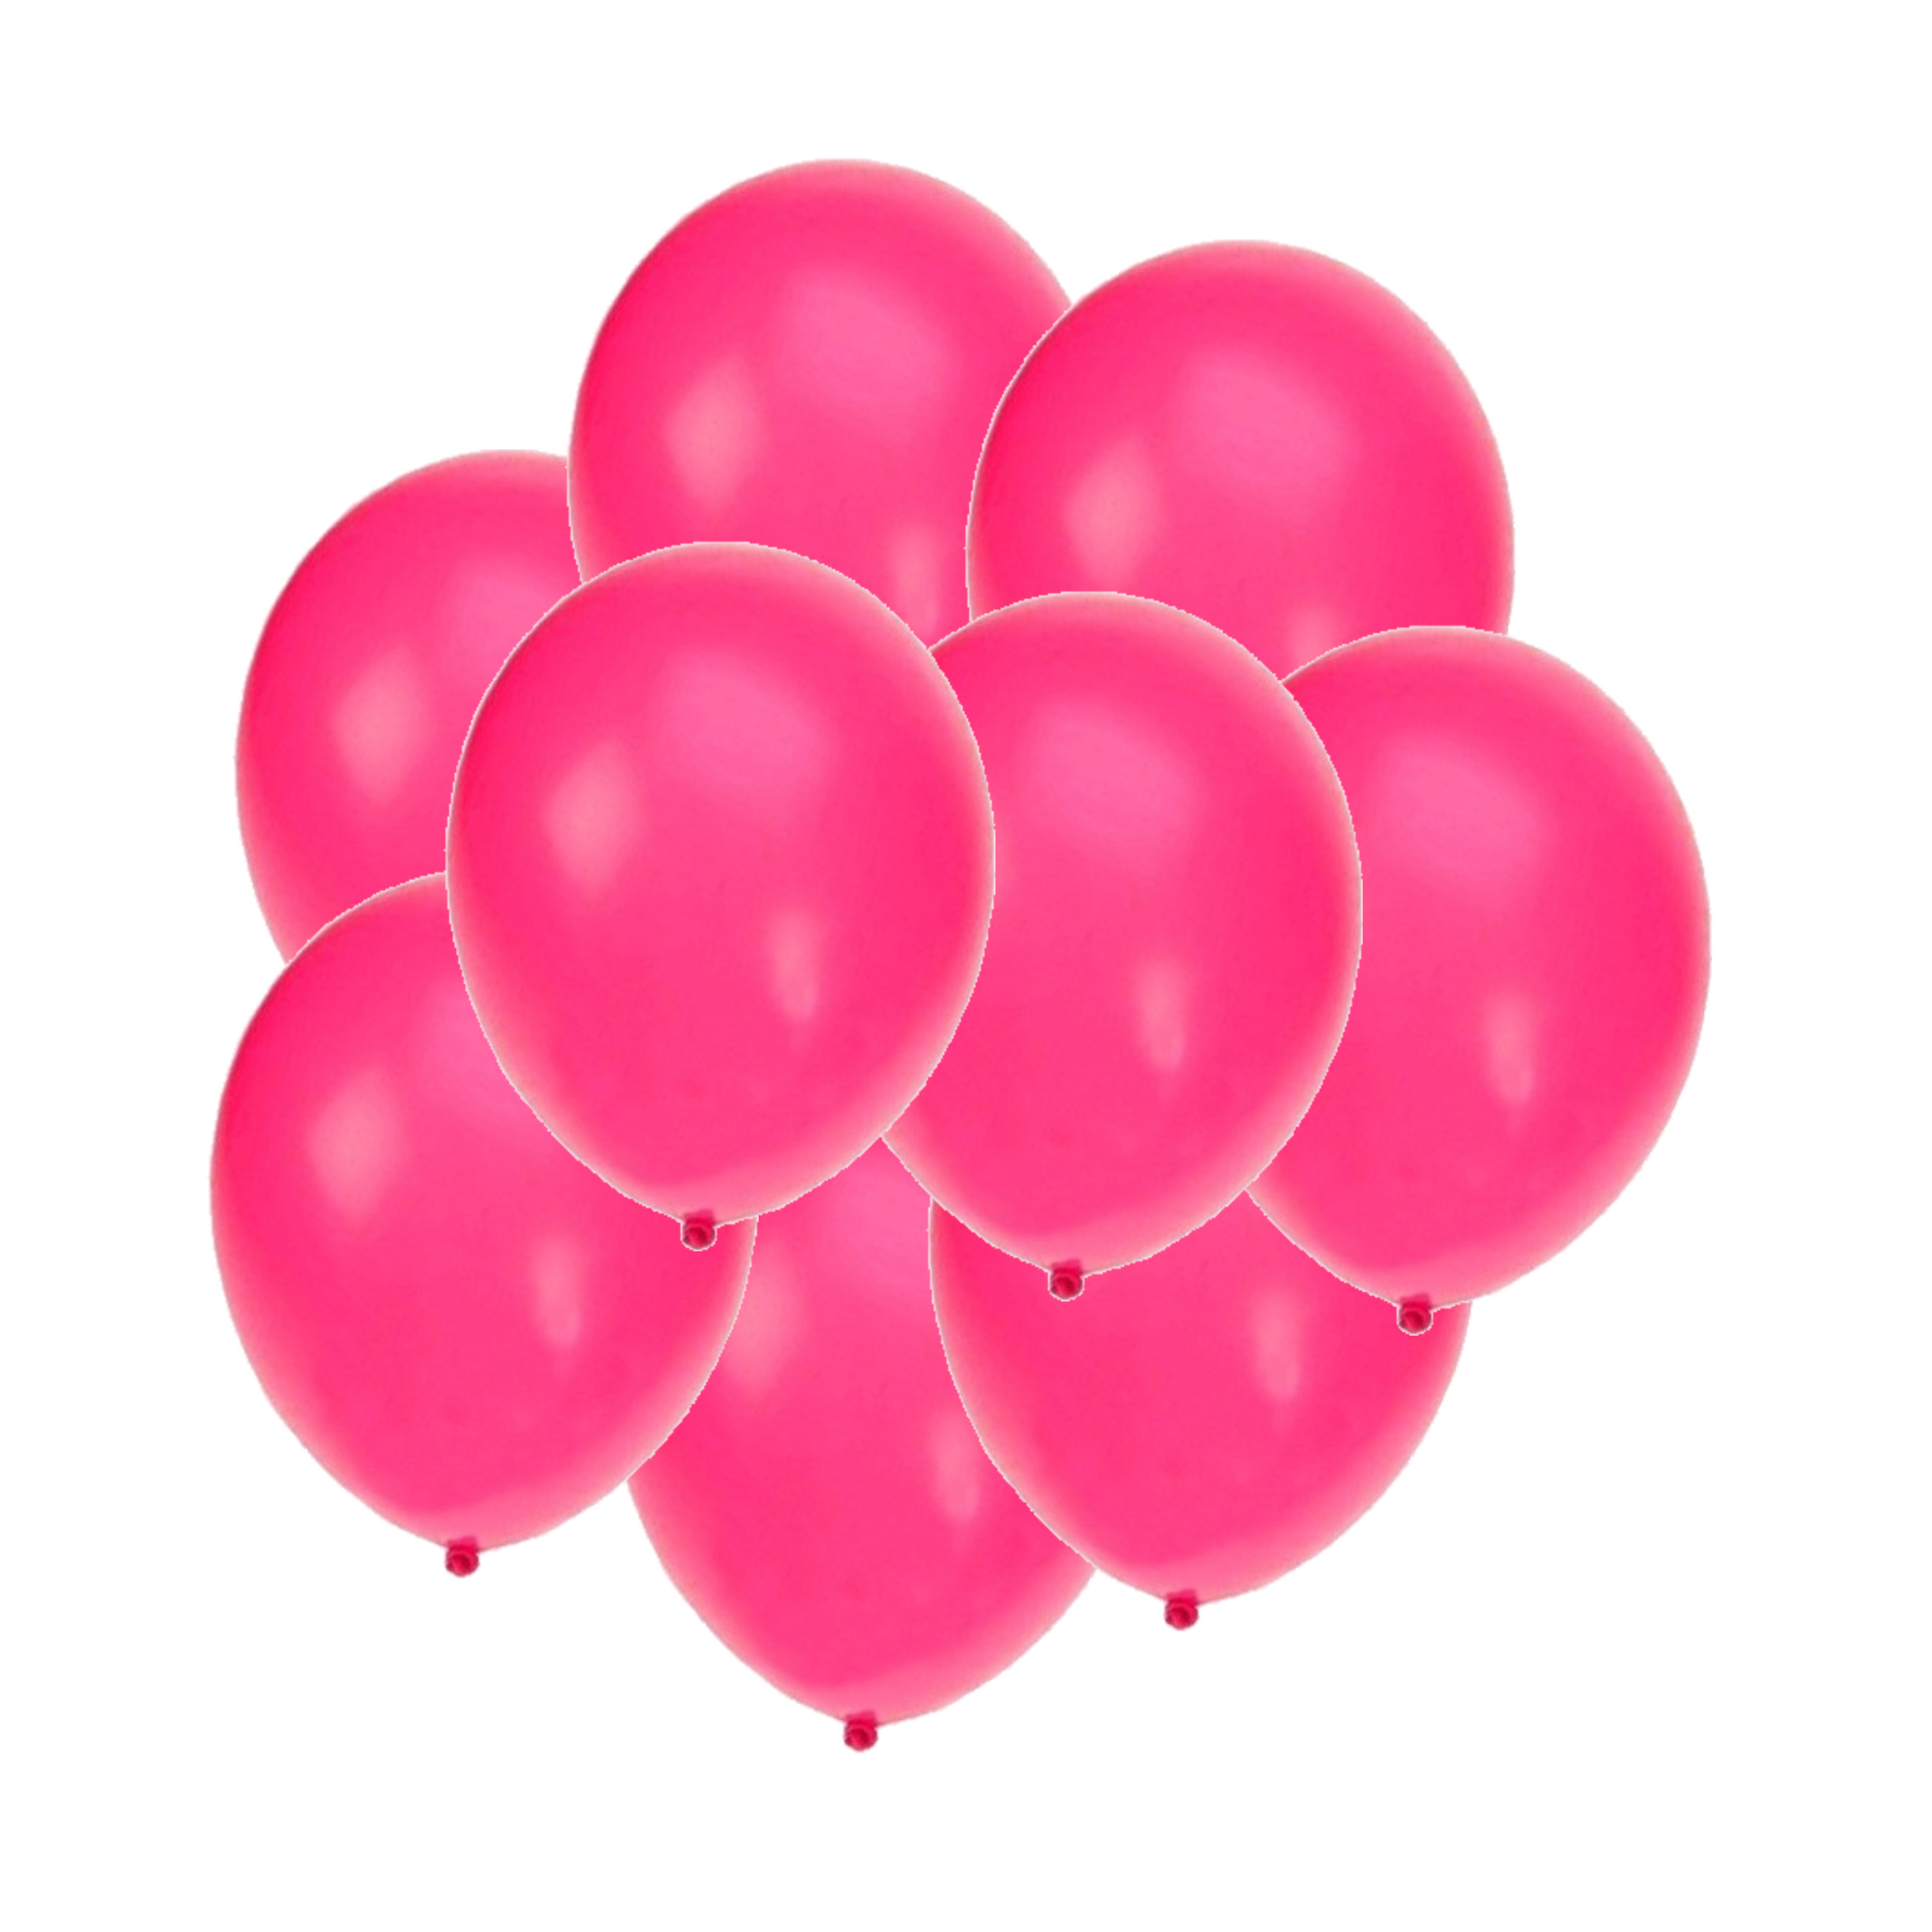 Bellatio decorations - Ballonnen knalroze/felroze 50x stuks rond 27 cm -